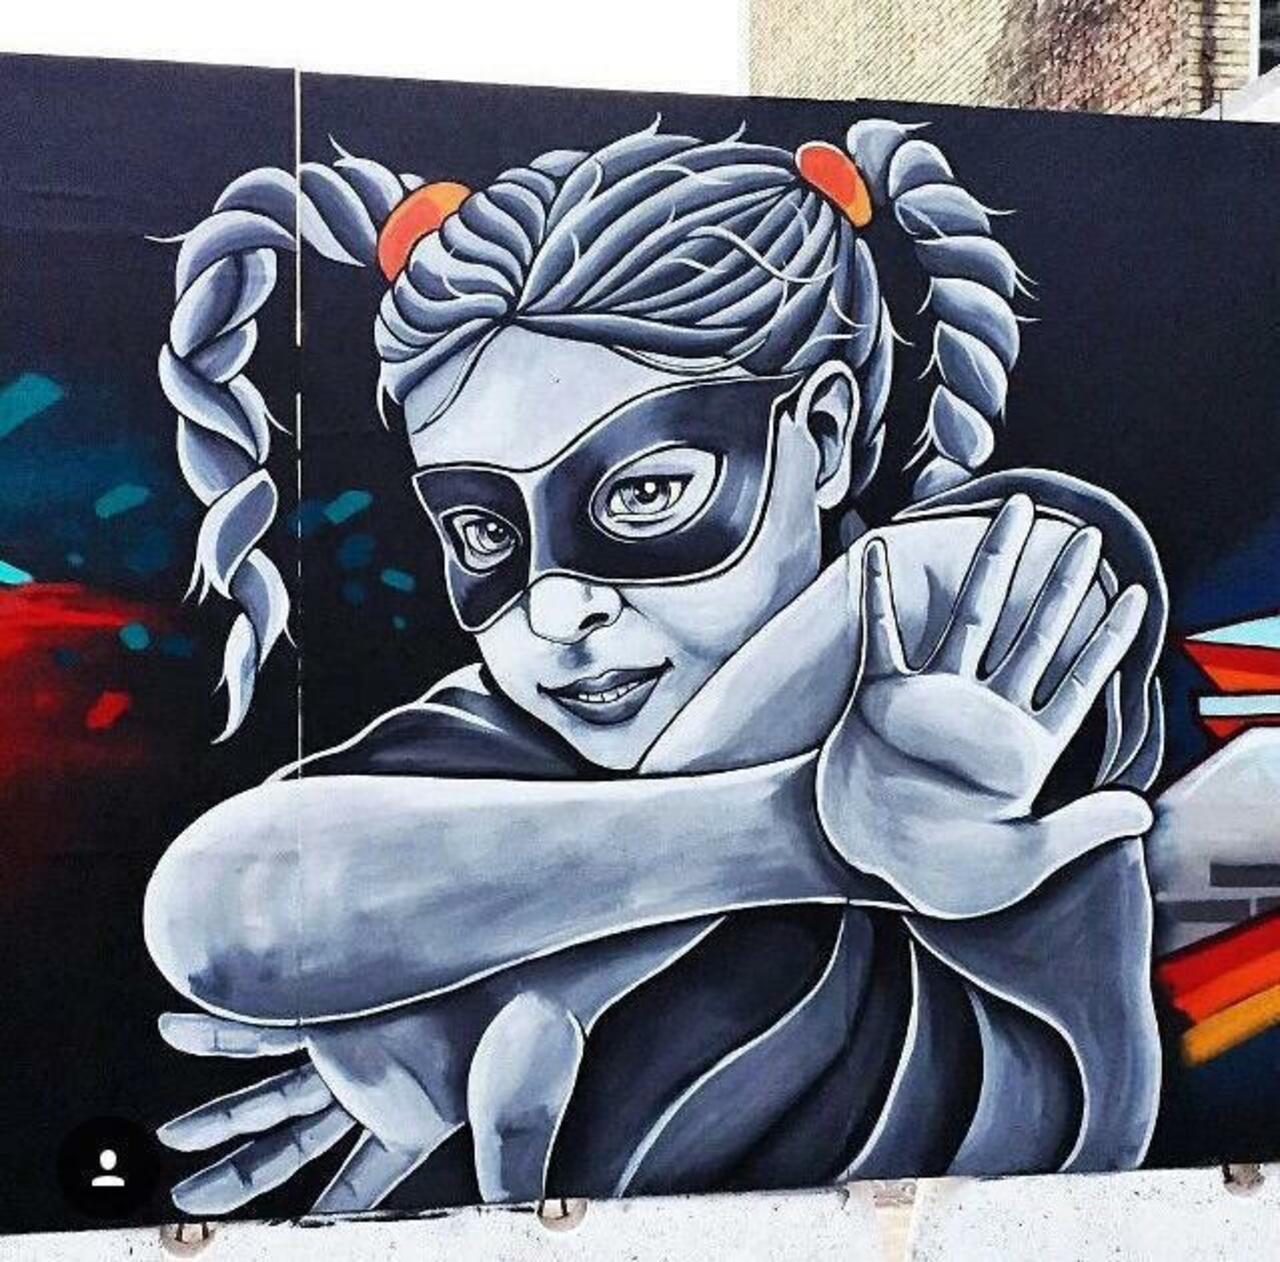 #switch a wall into #Streetart by #Stinehvid #bedifferent #graffiti #arte #art http://t.co/gMqRiV6JbS